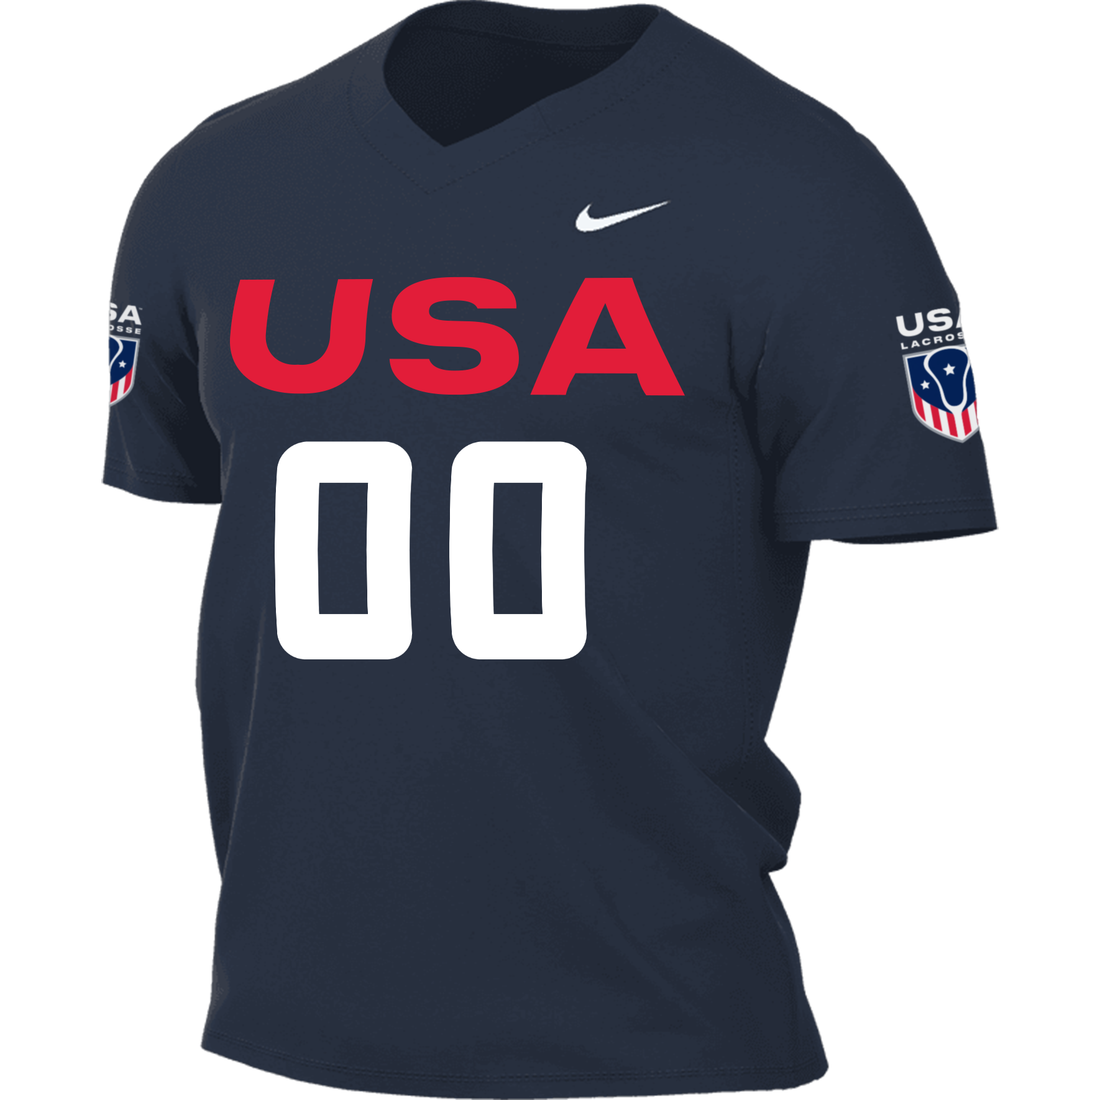 USA Lacrosse Nike Custom Number Jersey